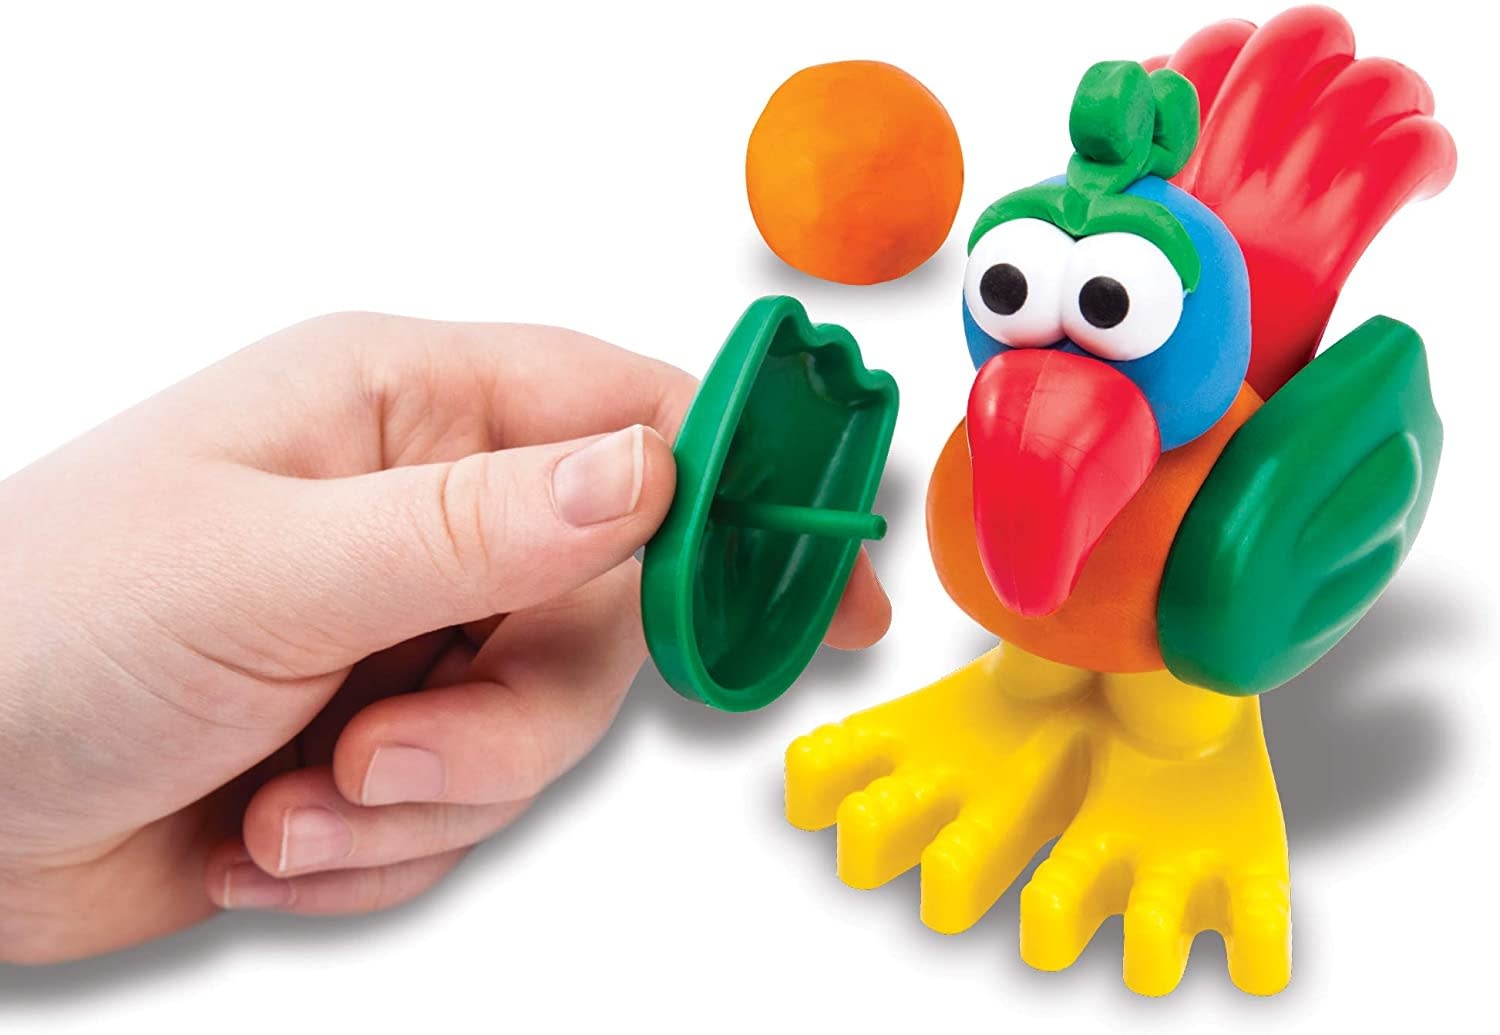 Plasticine Plasticine Character Creator Toy